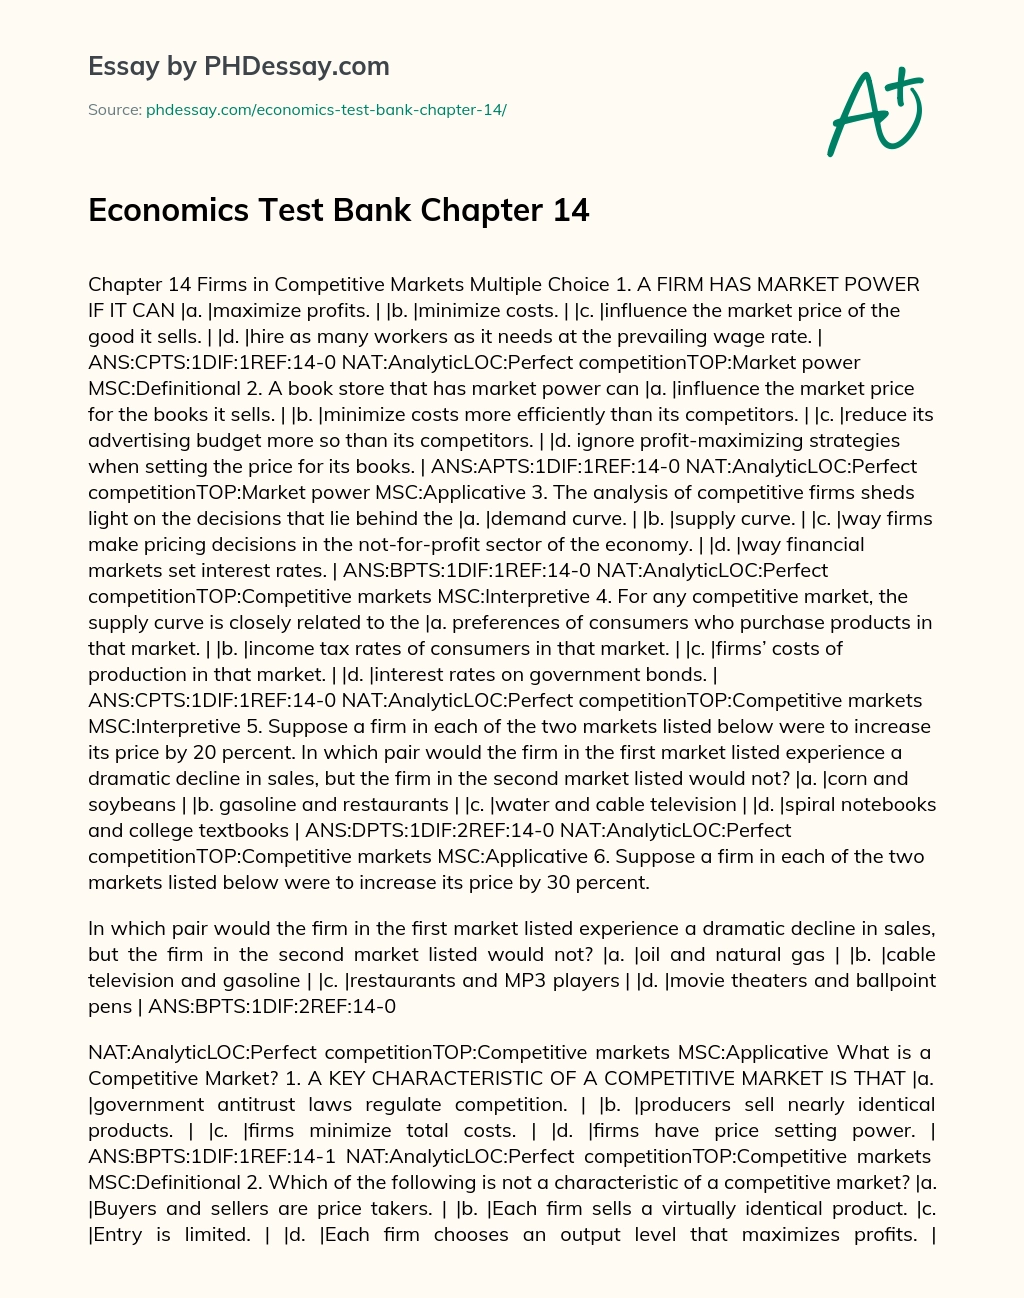 Economics Test Bank Chapter 14 essay